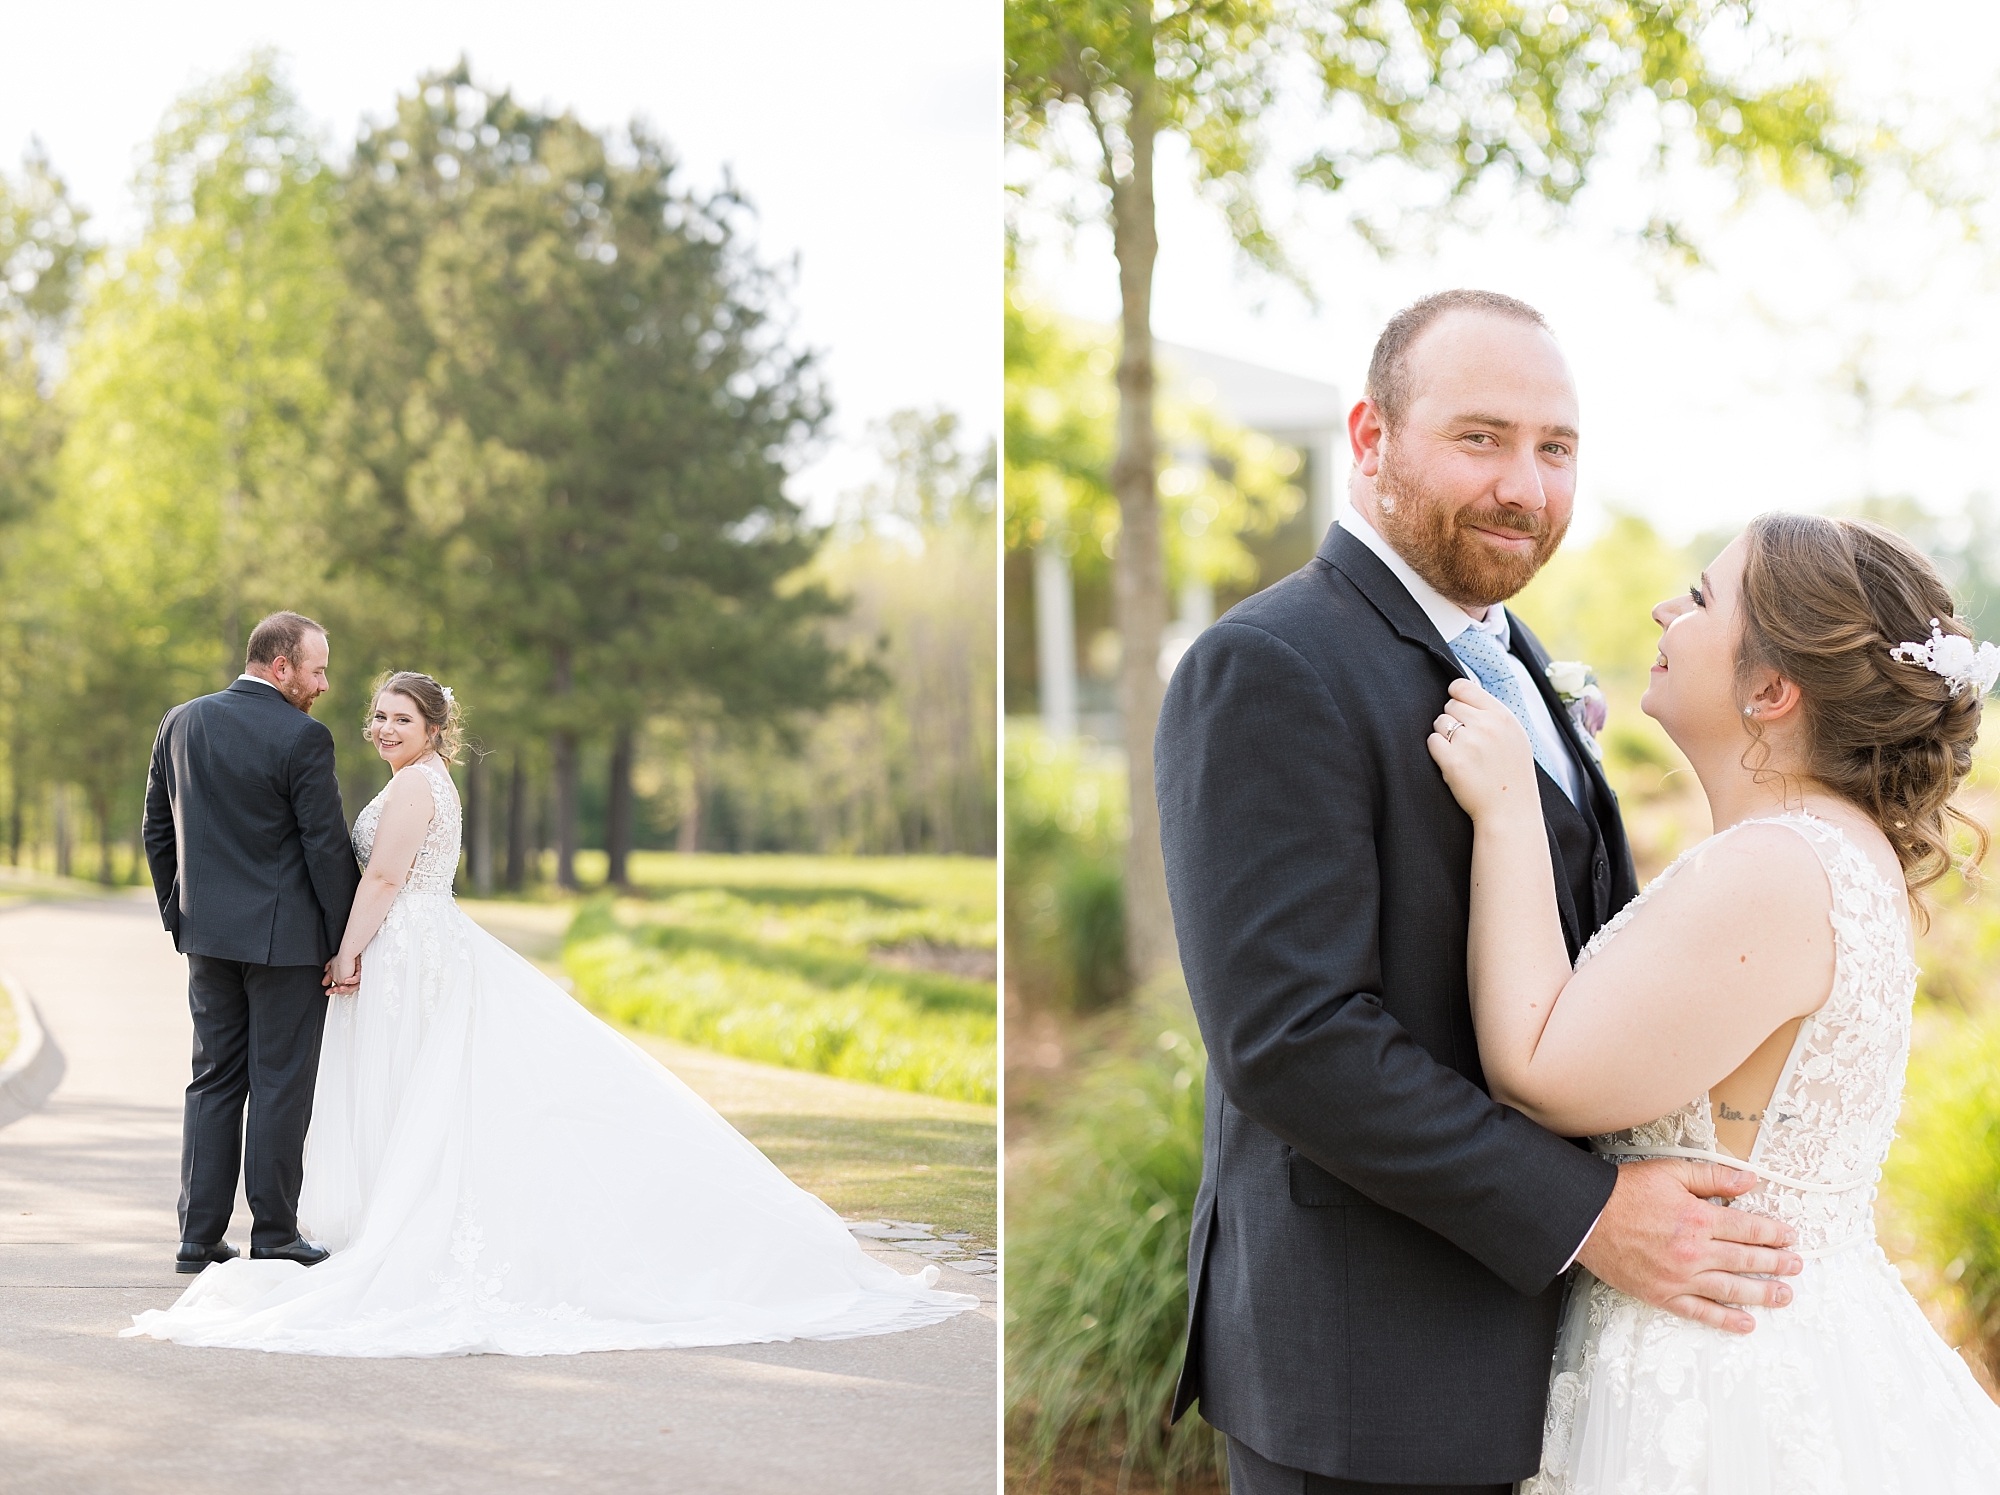 12 Oaks country club bride and groom - Raleigh NC Wedding Photographer - Sarah Hinckley Photography